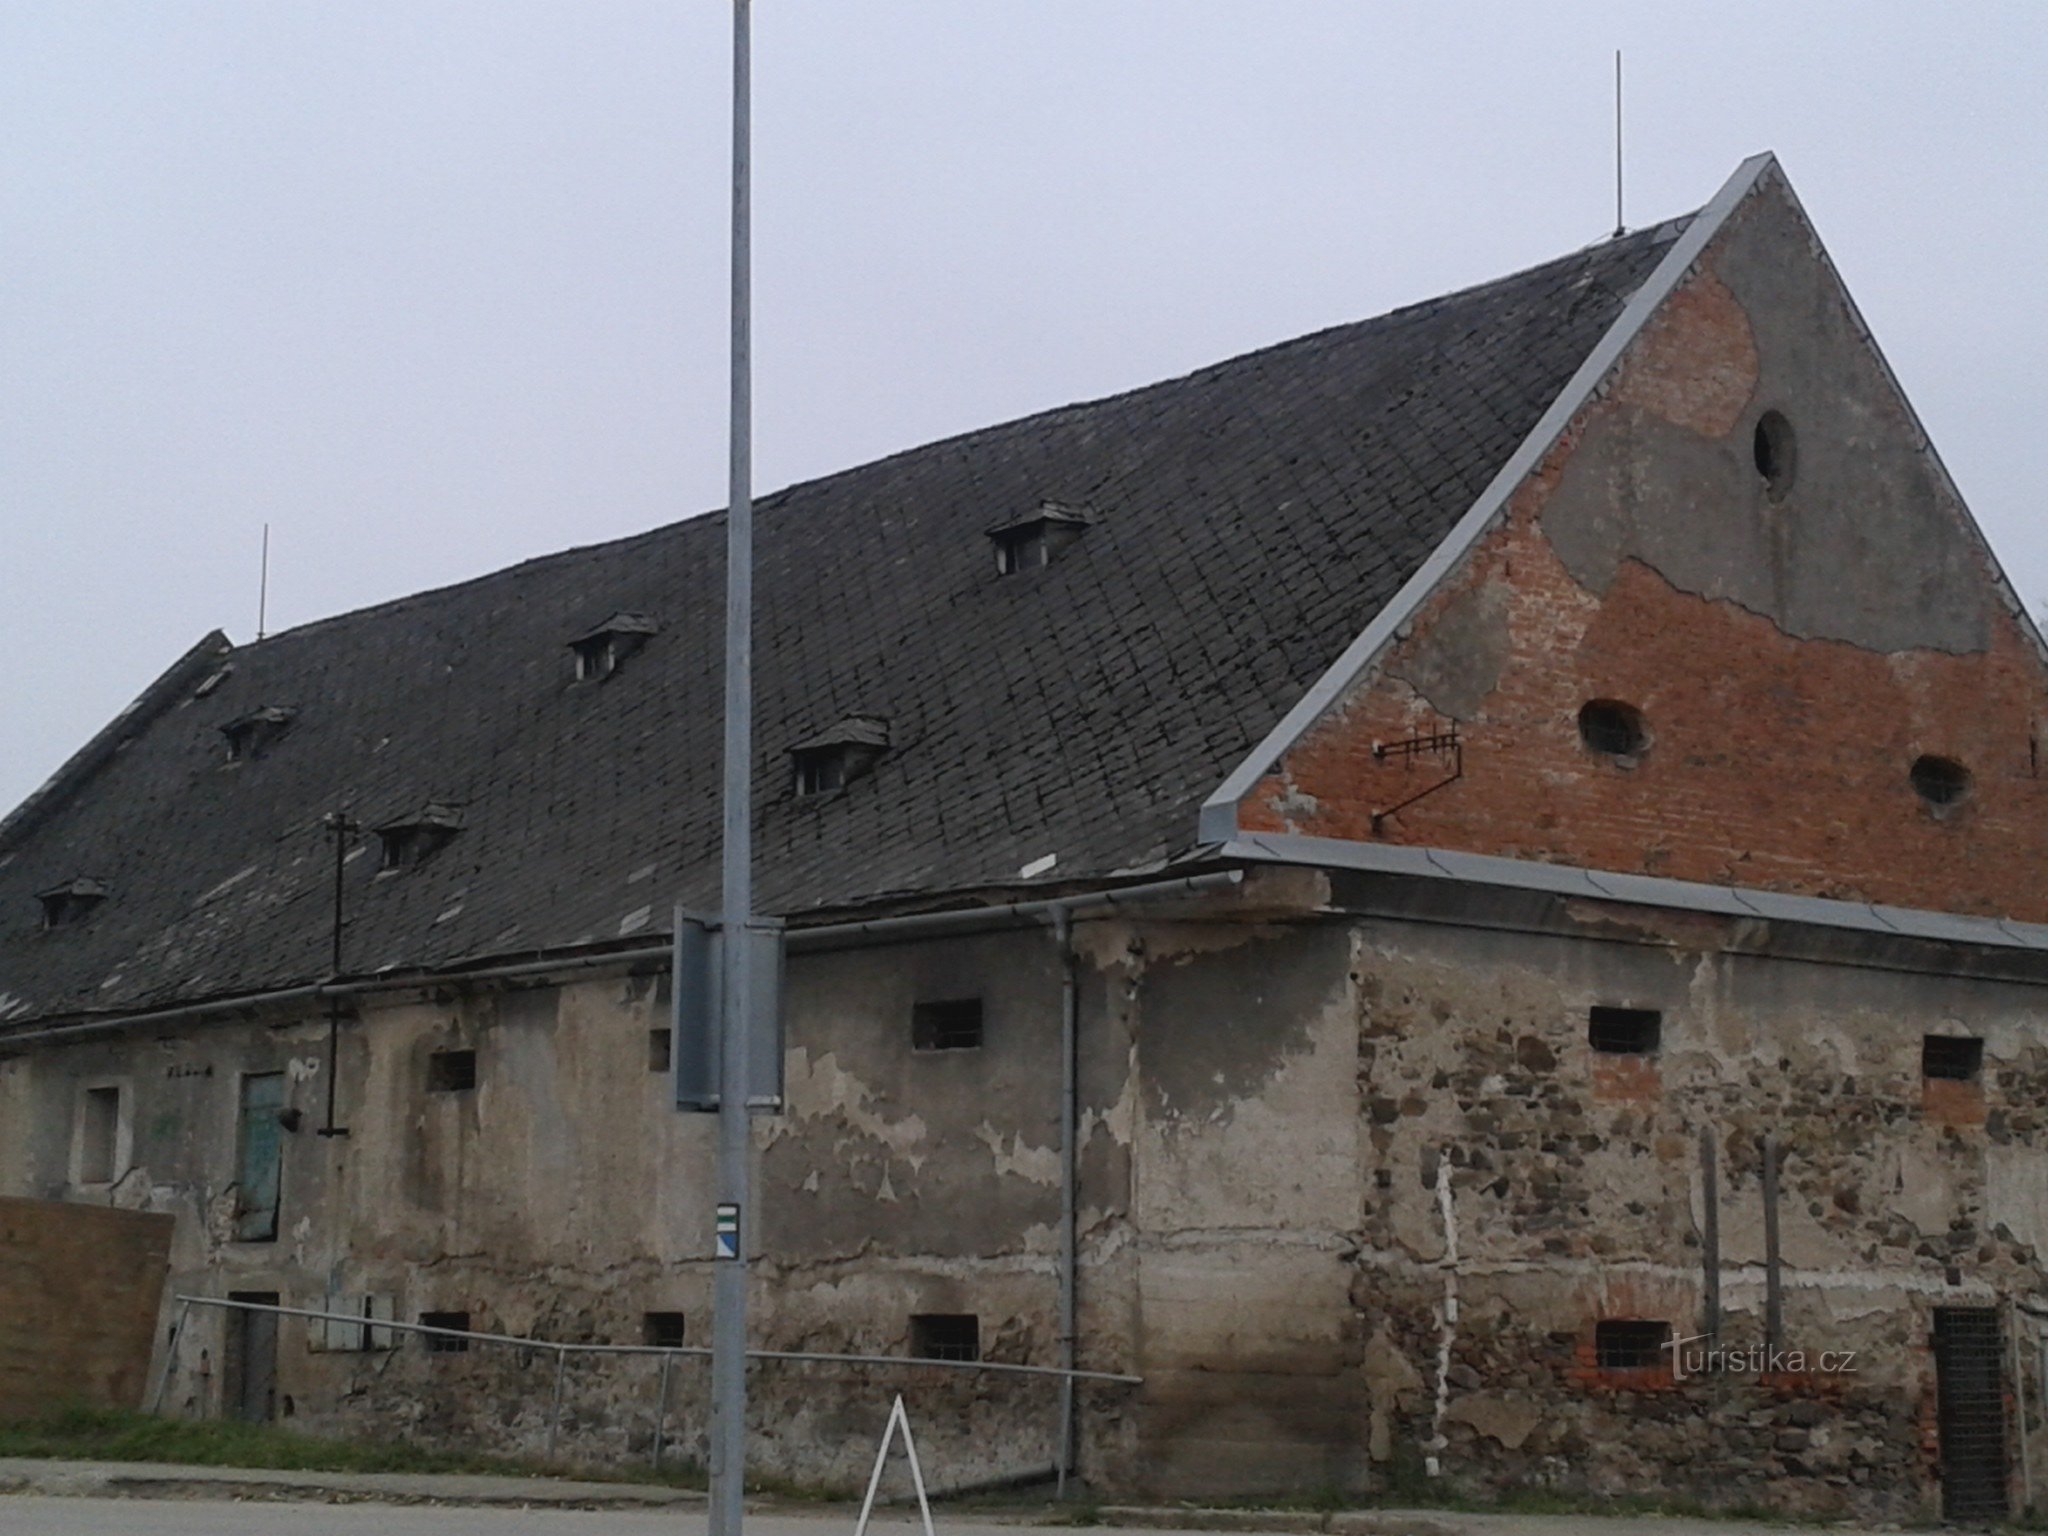 Zábřeh - grenier baroque - monument culturel immeuble protégé